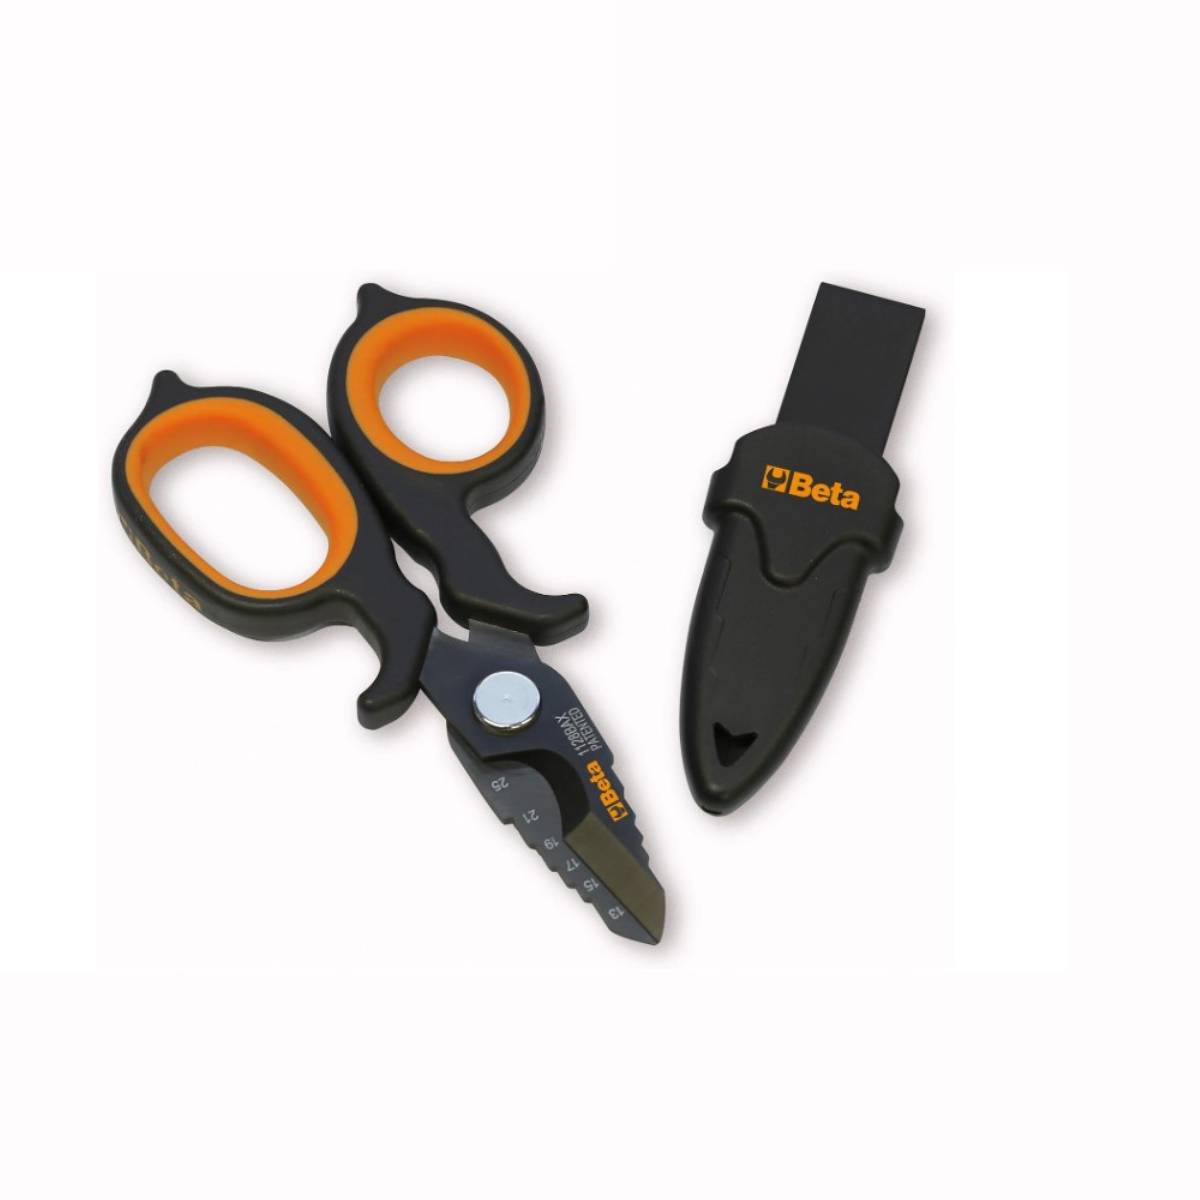 Double-acting electricians' scissors, milling profile in DLC-coated INOX steel